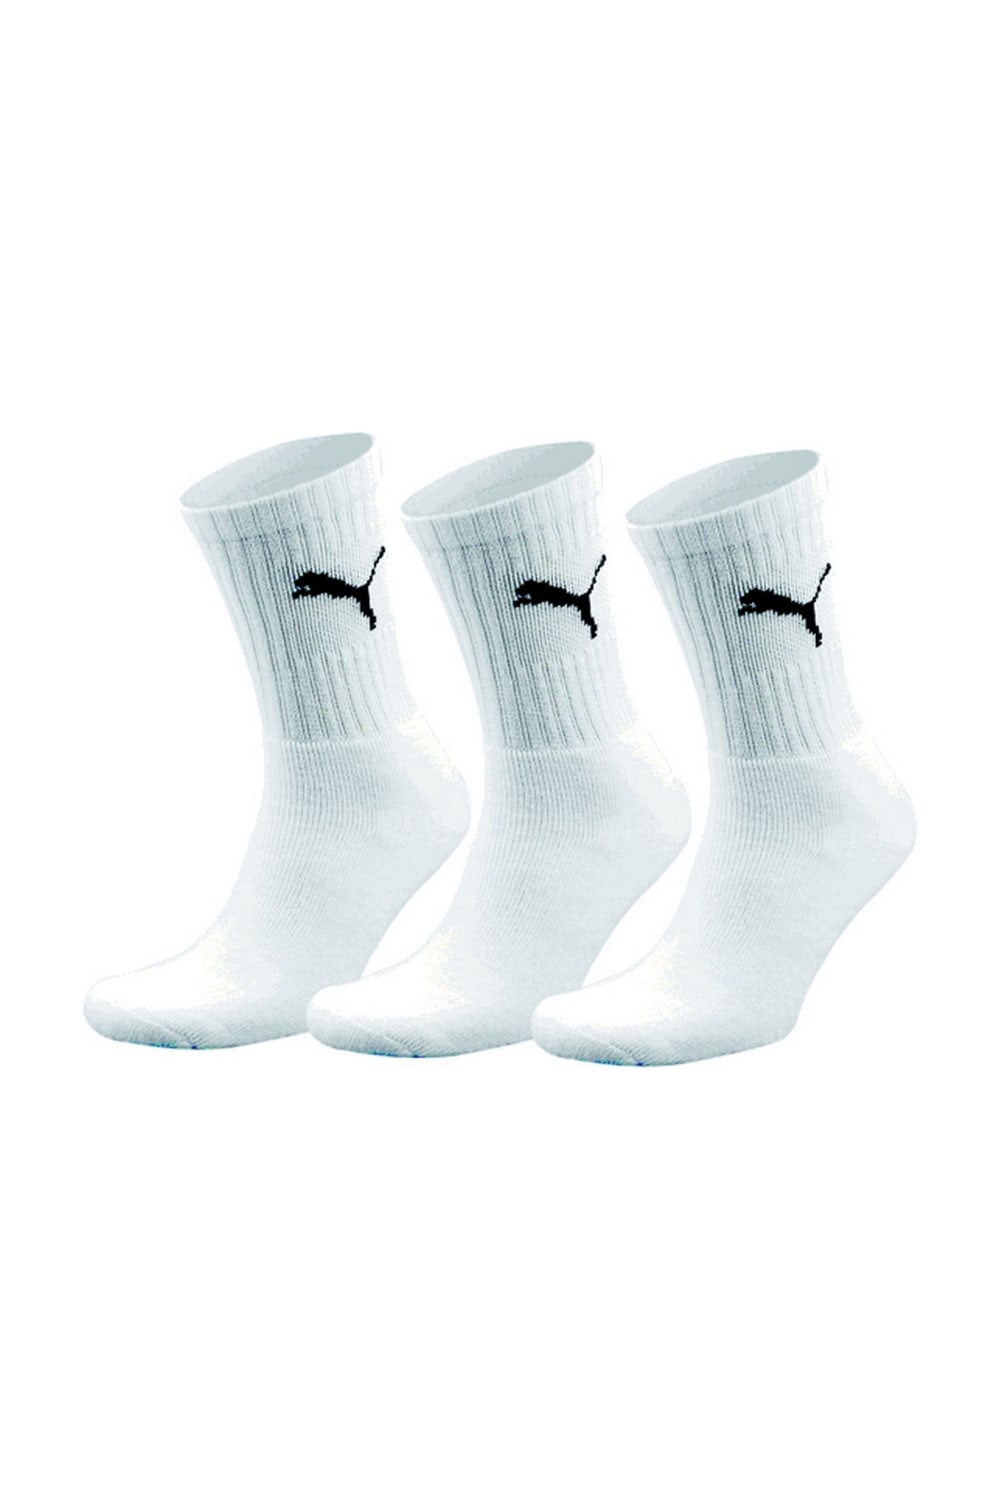 Puma Crew Trainer Socks 3 Pair Pack/Mens Socks (White)